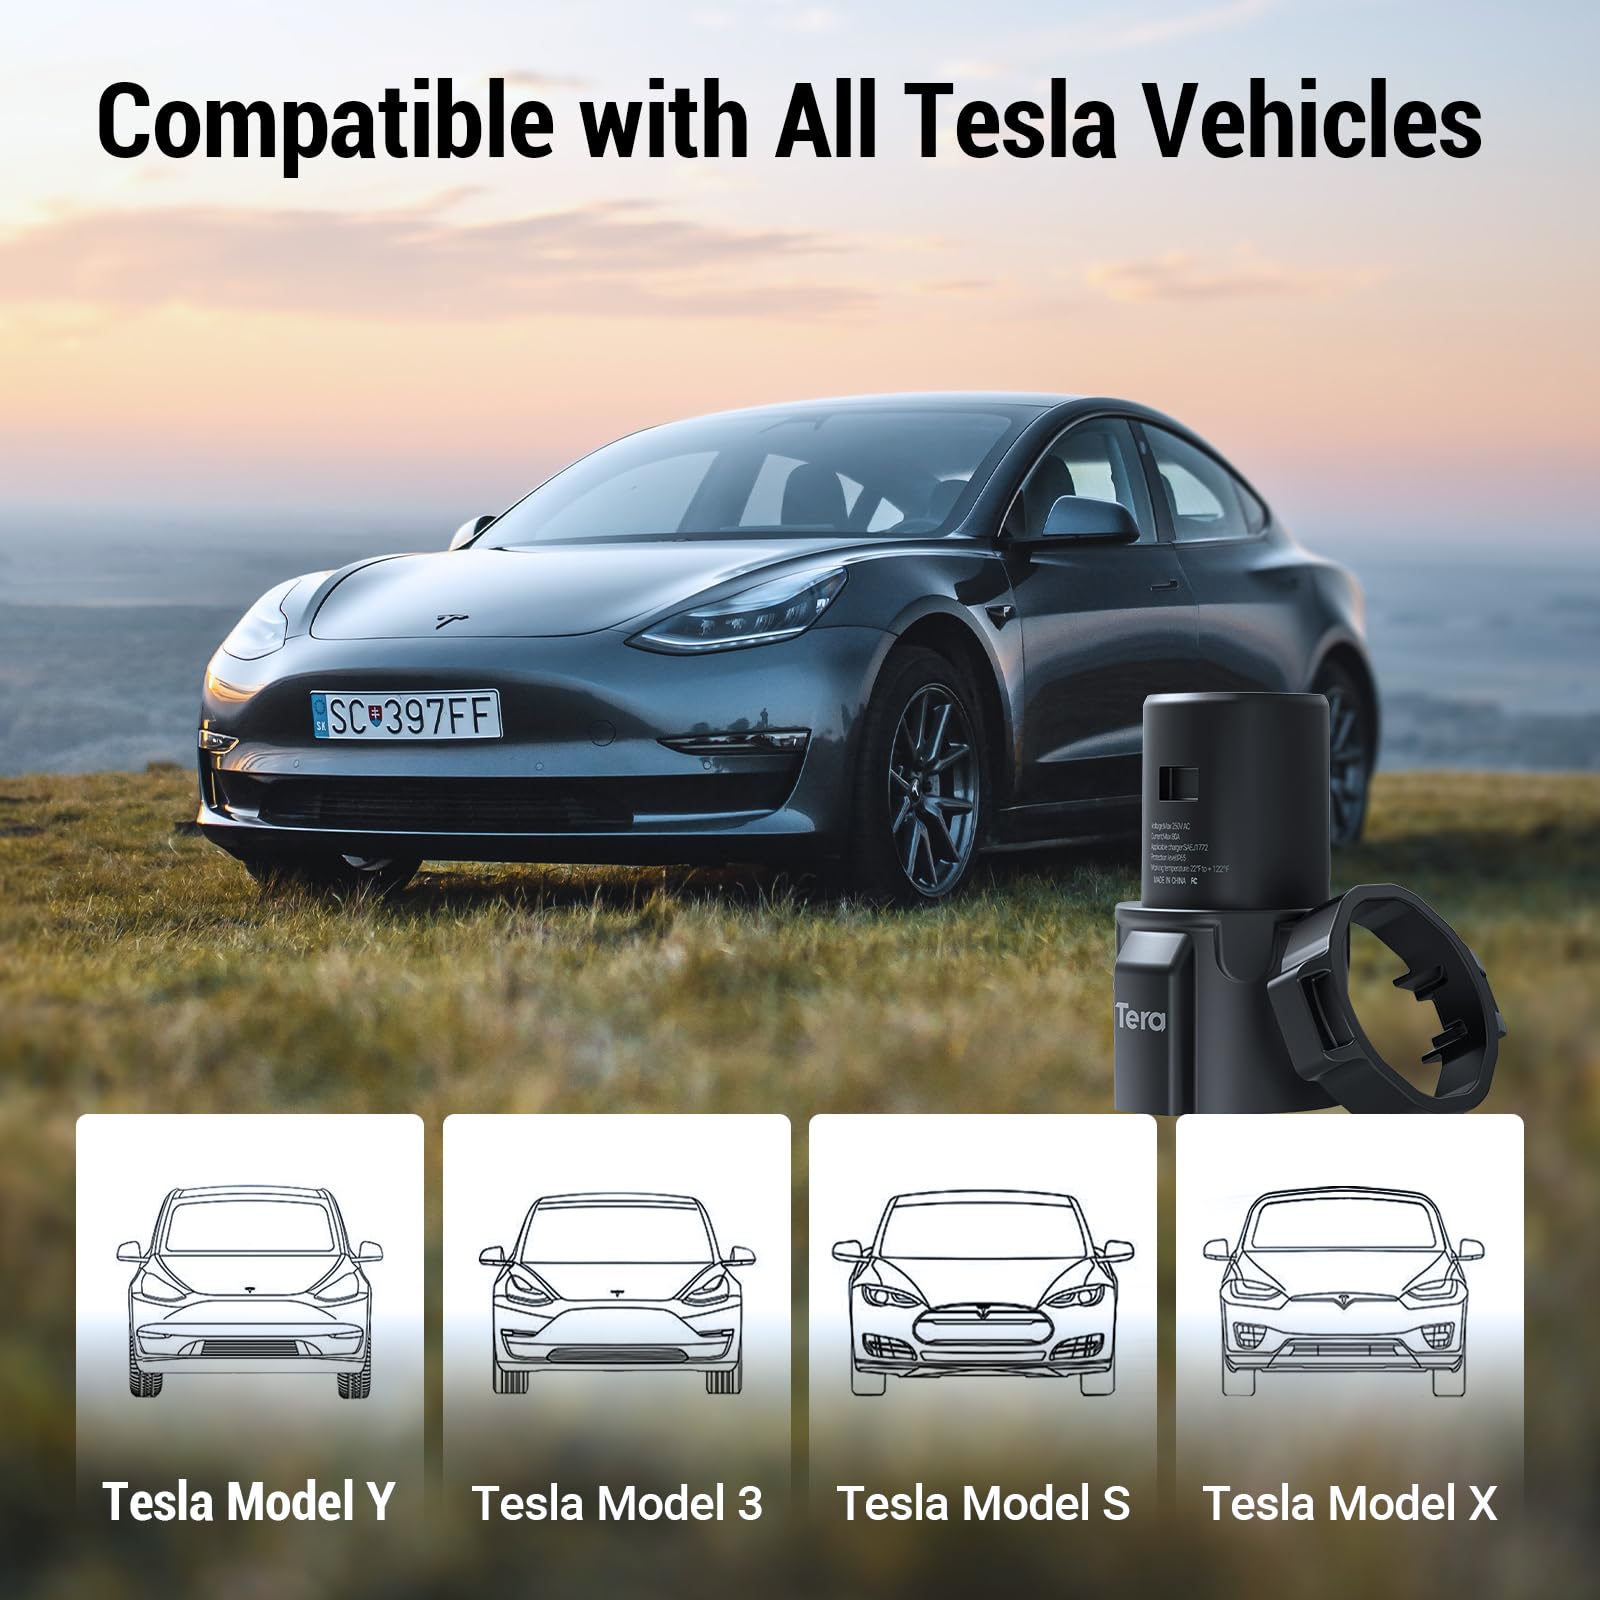 Tesla Charger Adapter - Effortless Charging for Models S, 3, X